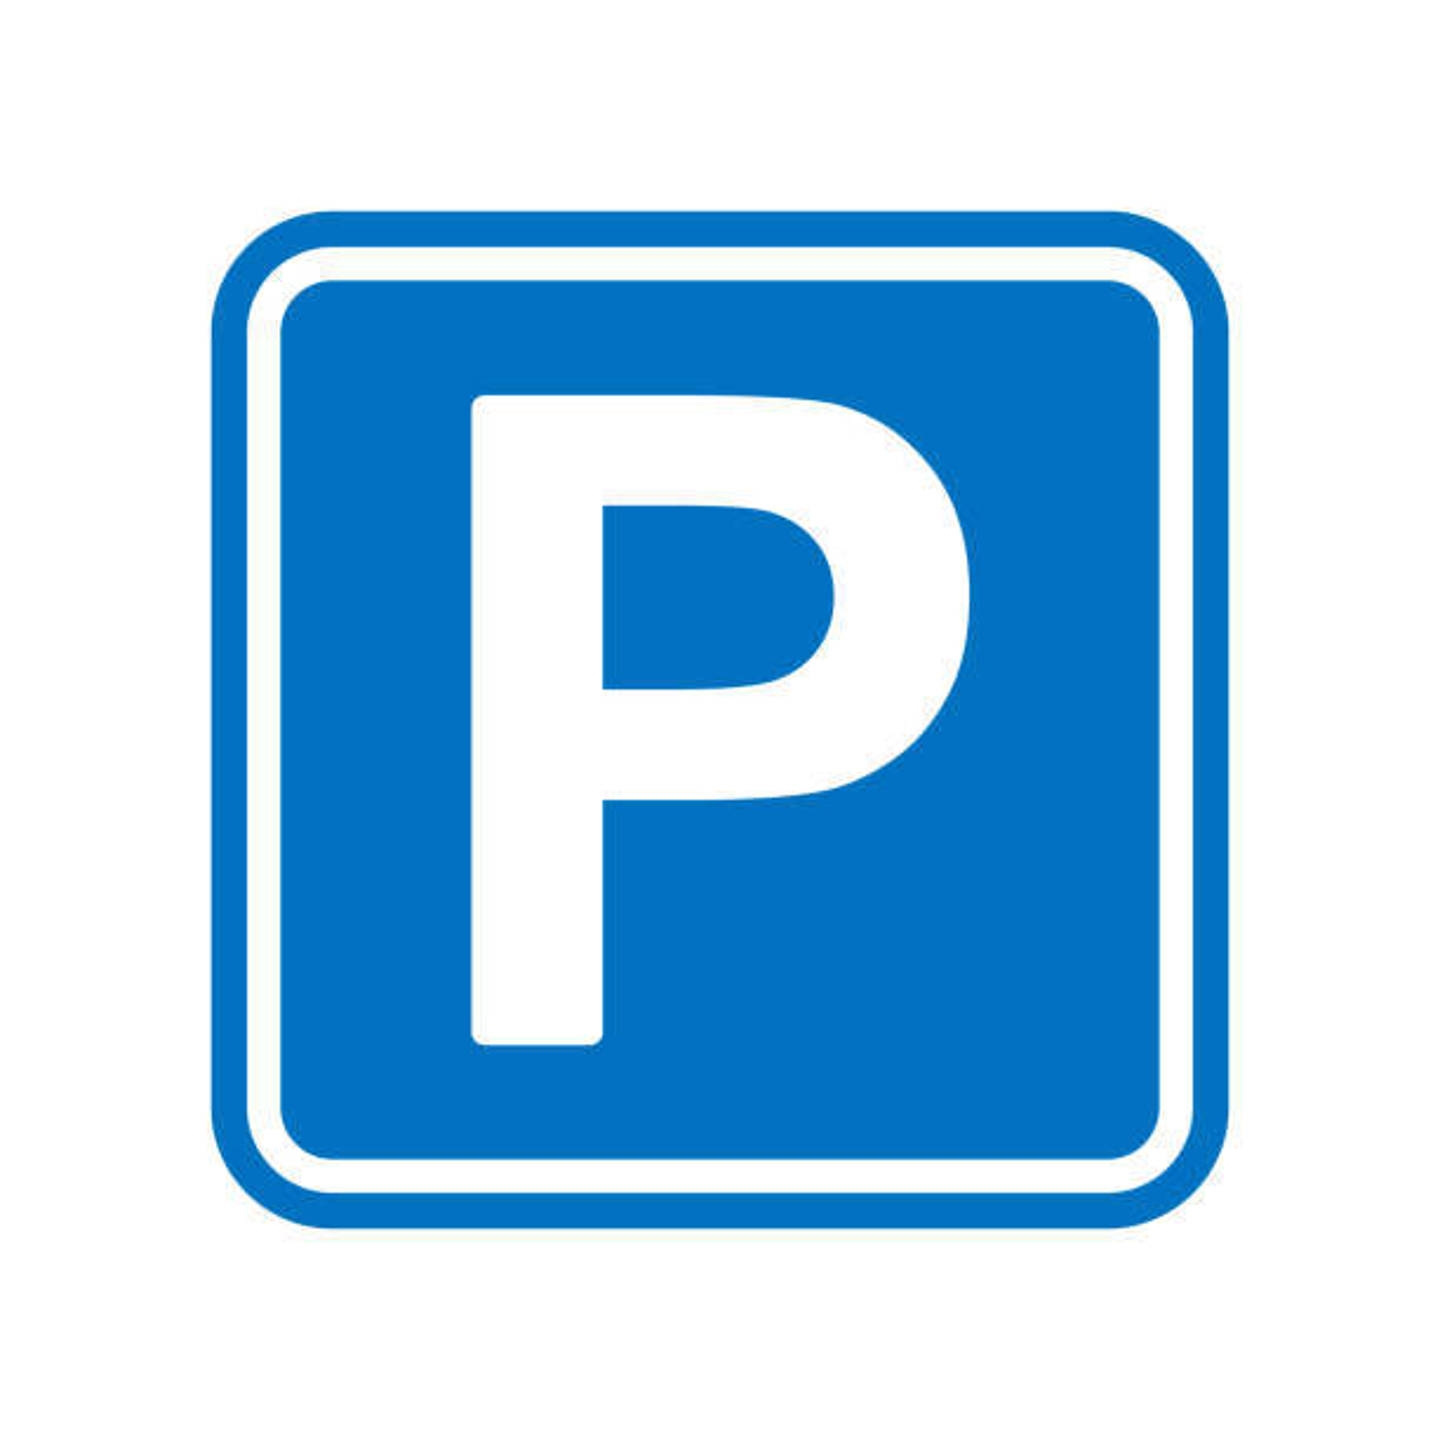 Parking à vendre à Neder-Over-Heembeek 1120 16480.00€  chambres 12.50m² - annonce 1324760